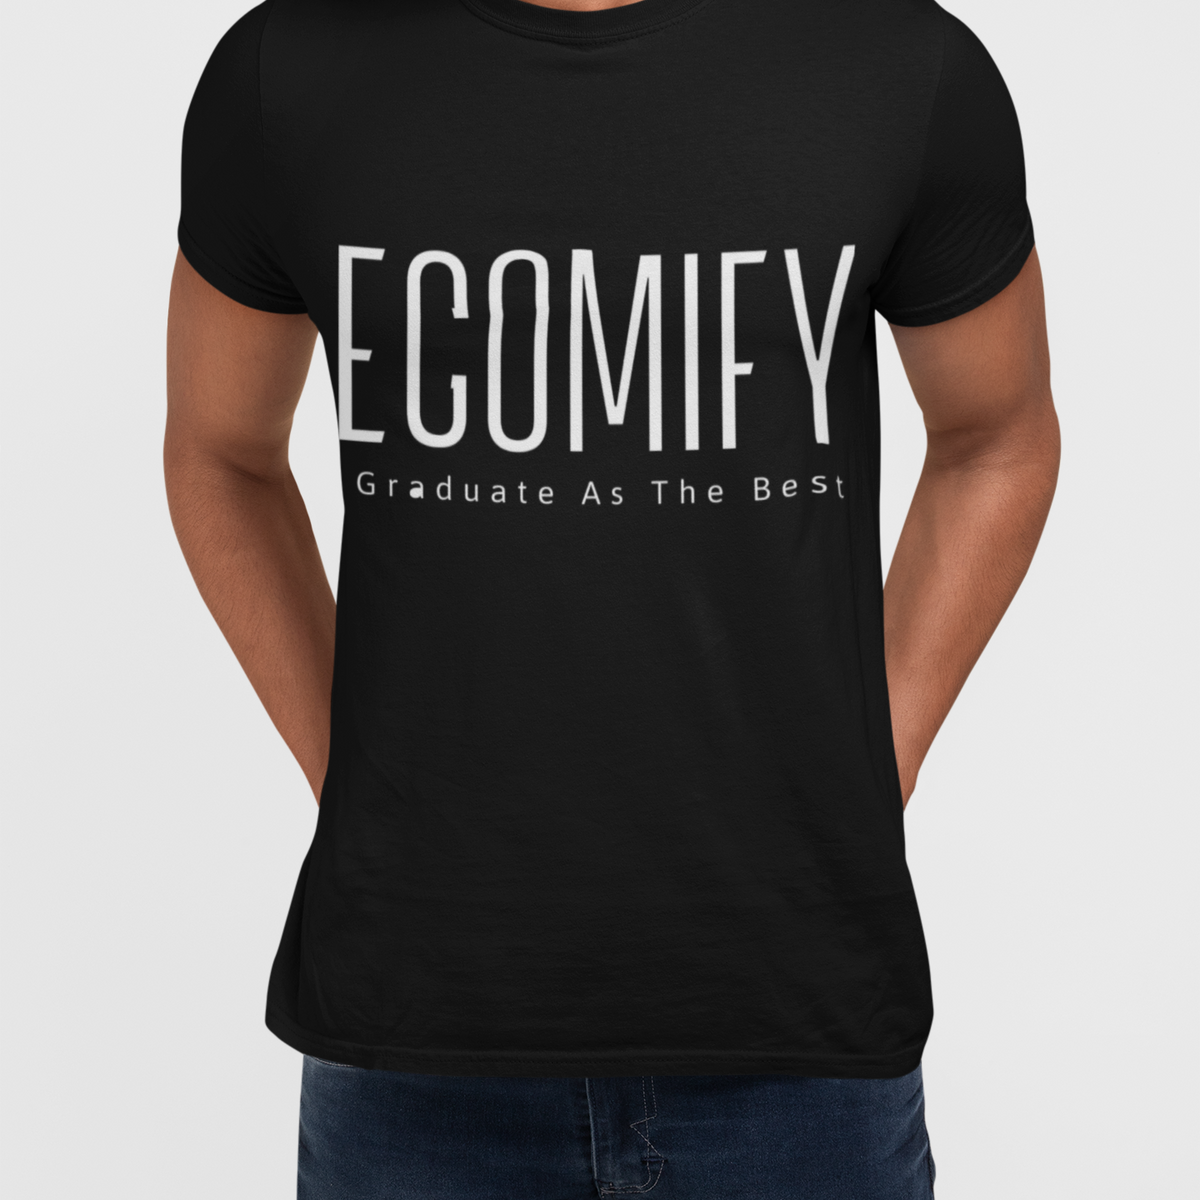 Ecomify® Plain T